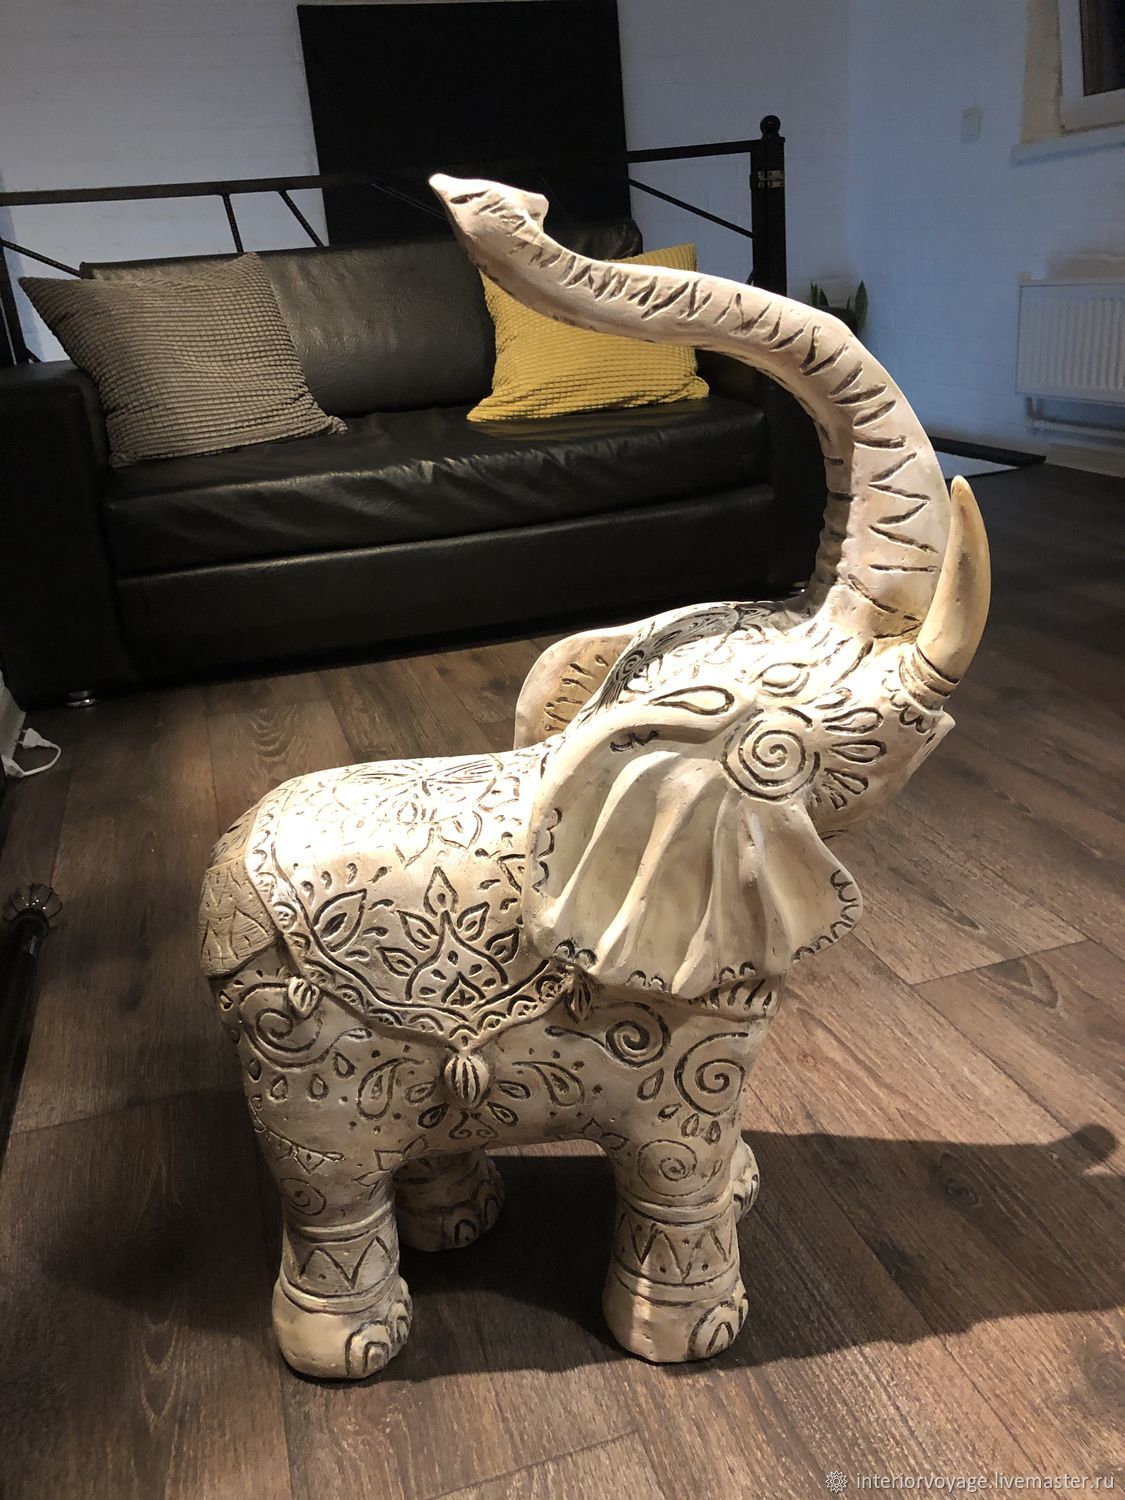 Интерьерная скульптура слон